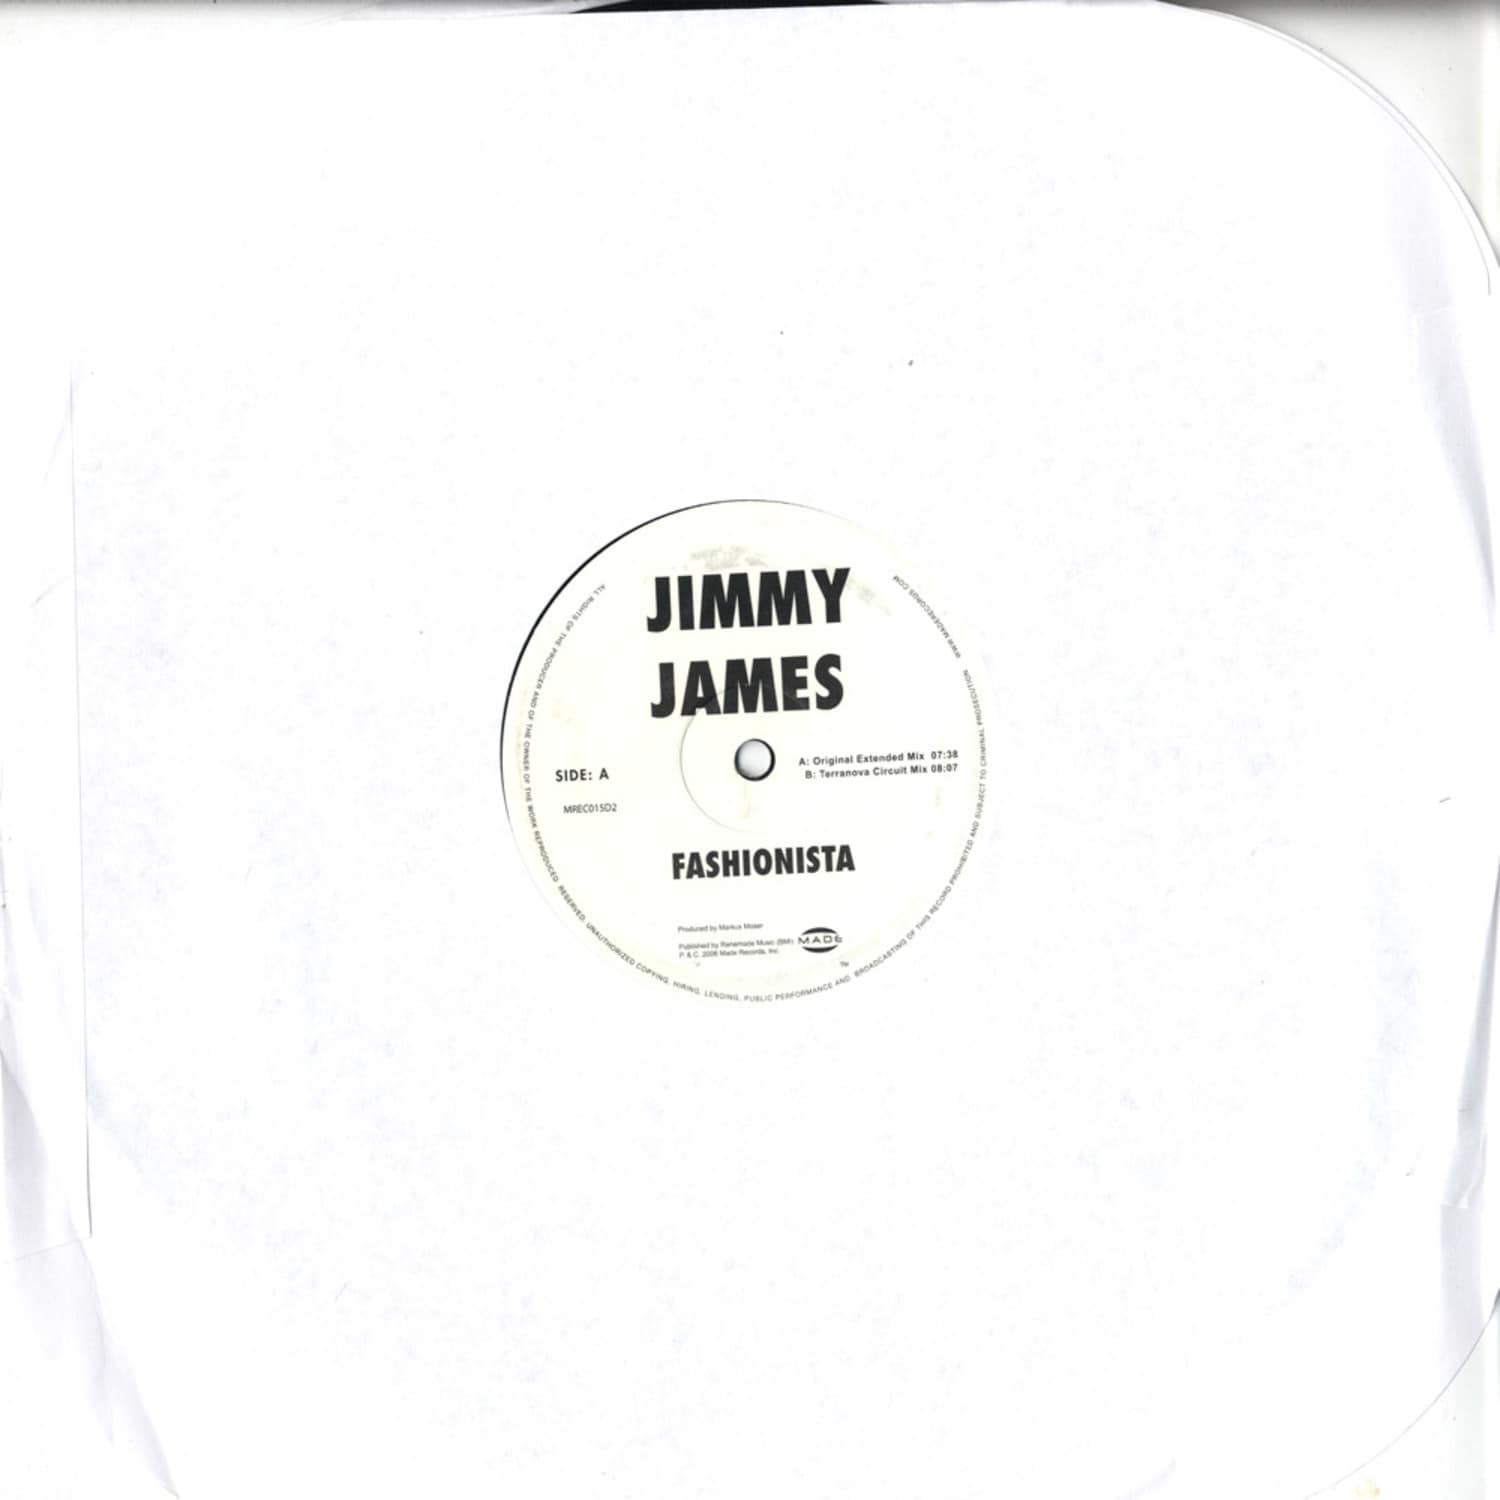 Jimmy James - FASHIONISTA 